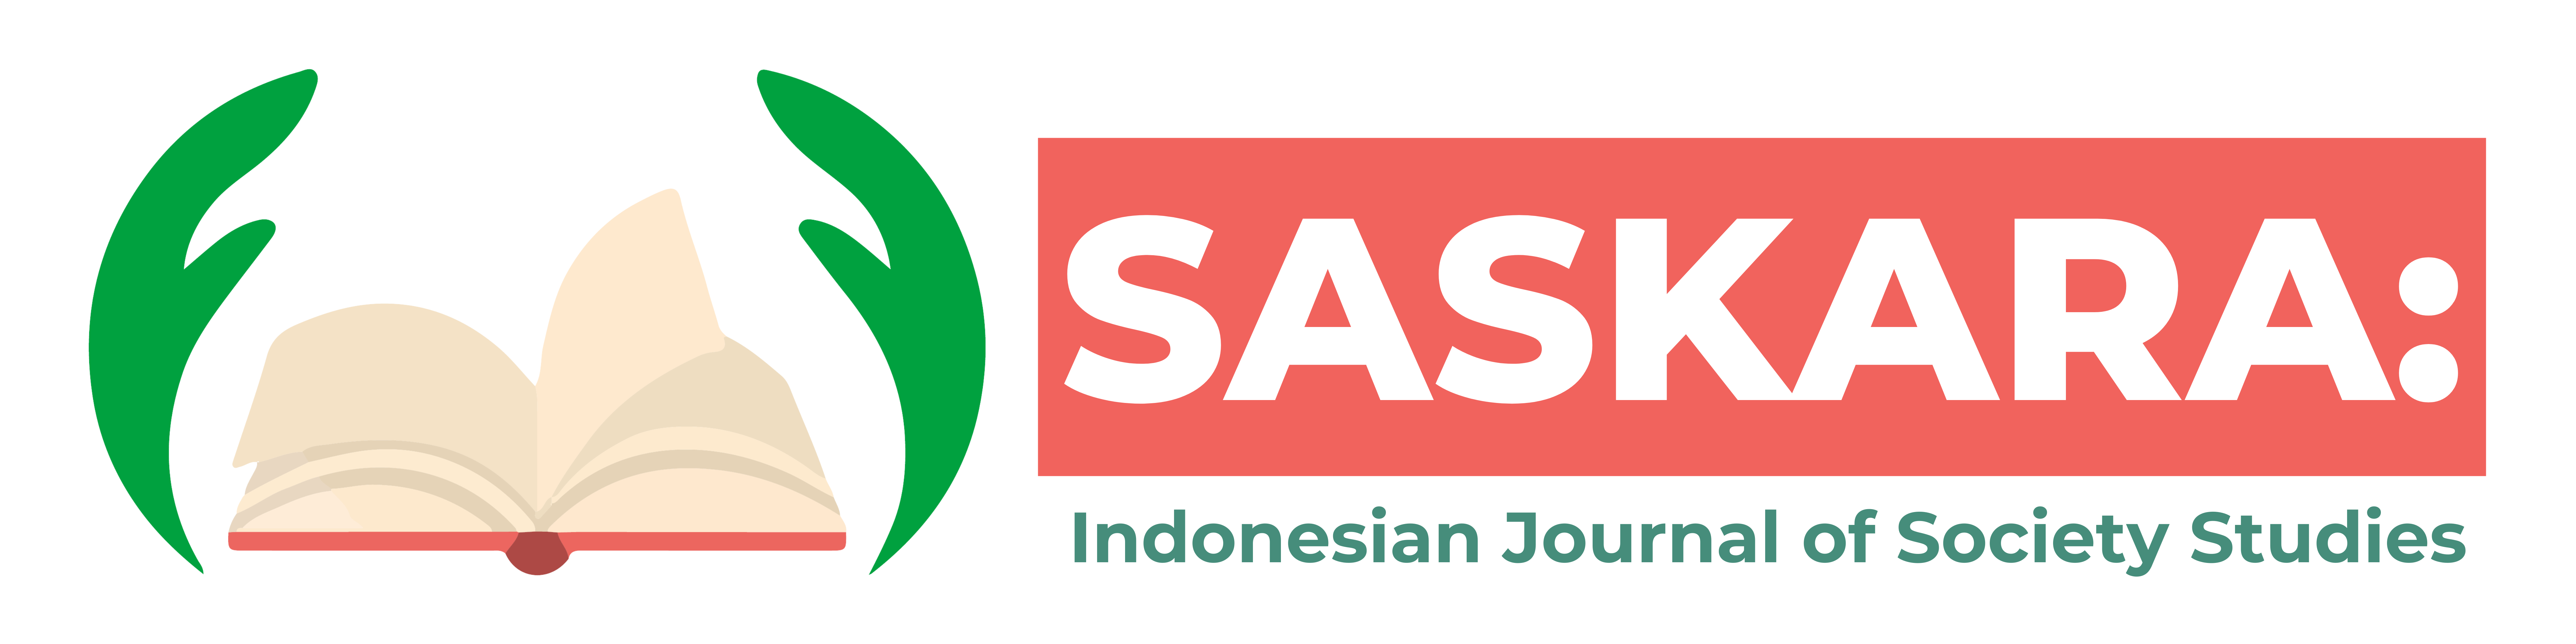 SASKARA: Indonesian Journal of Society Studies